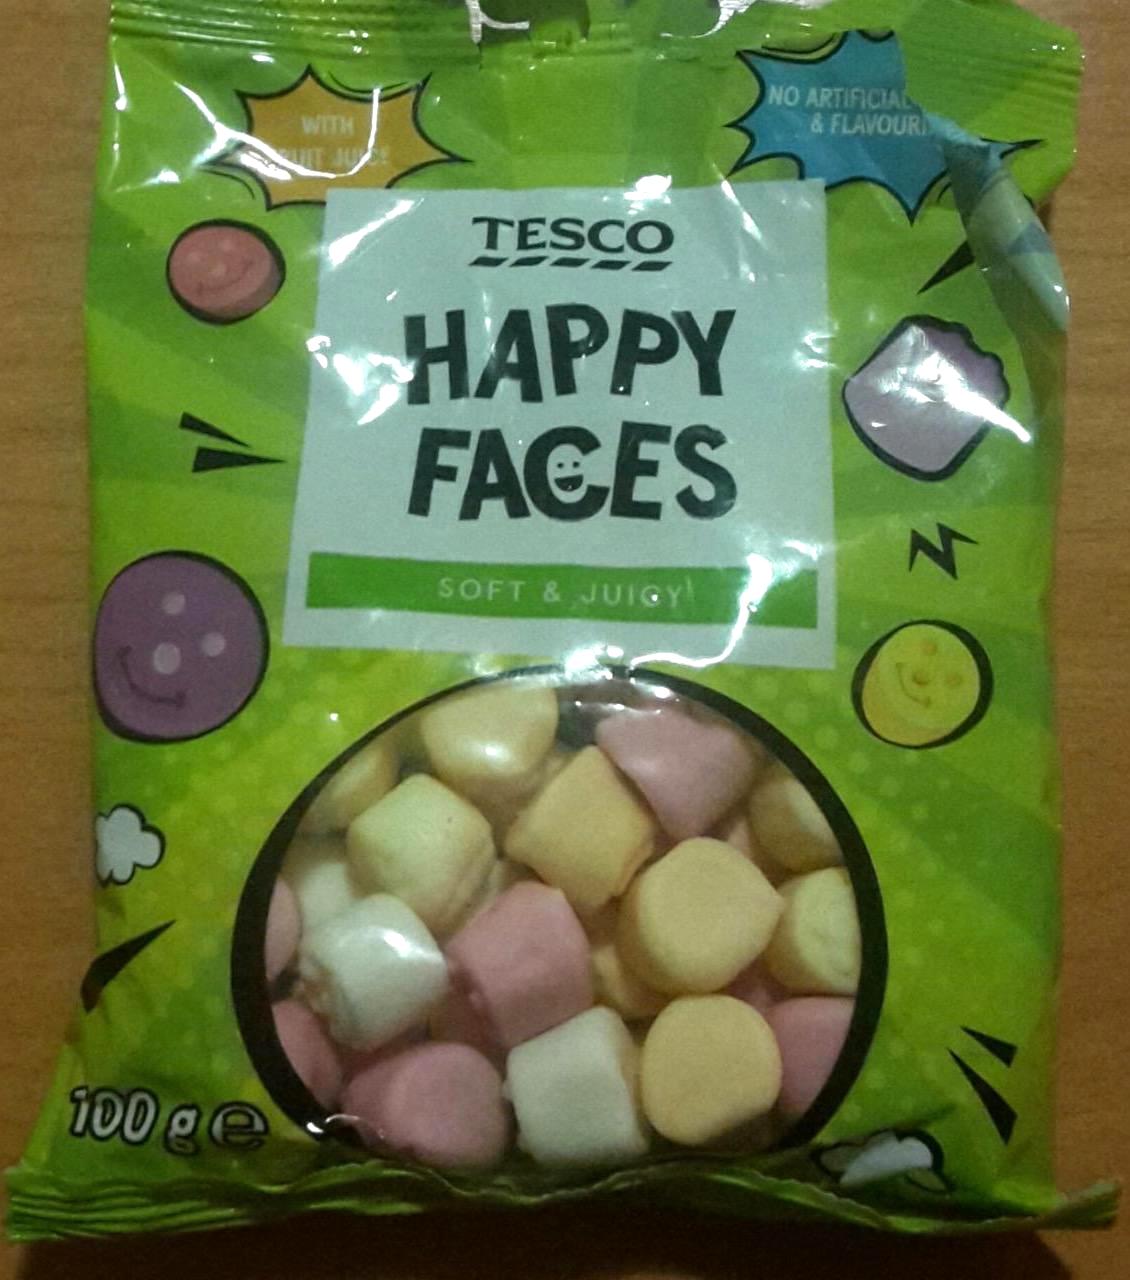 Képek - Happy faces gumicukor Tesco